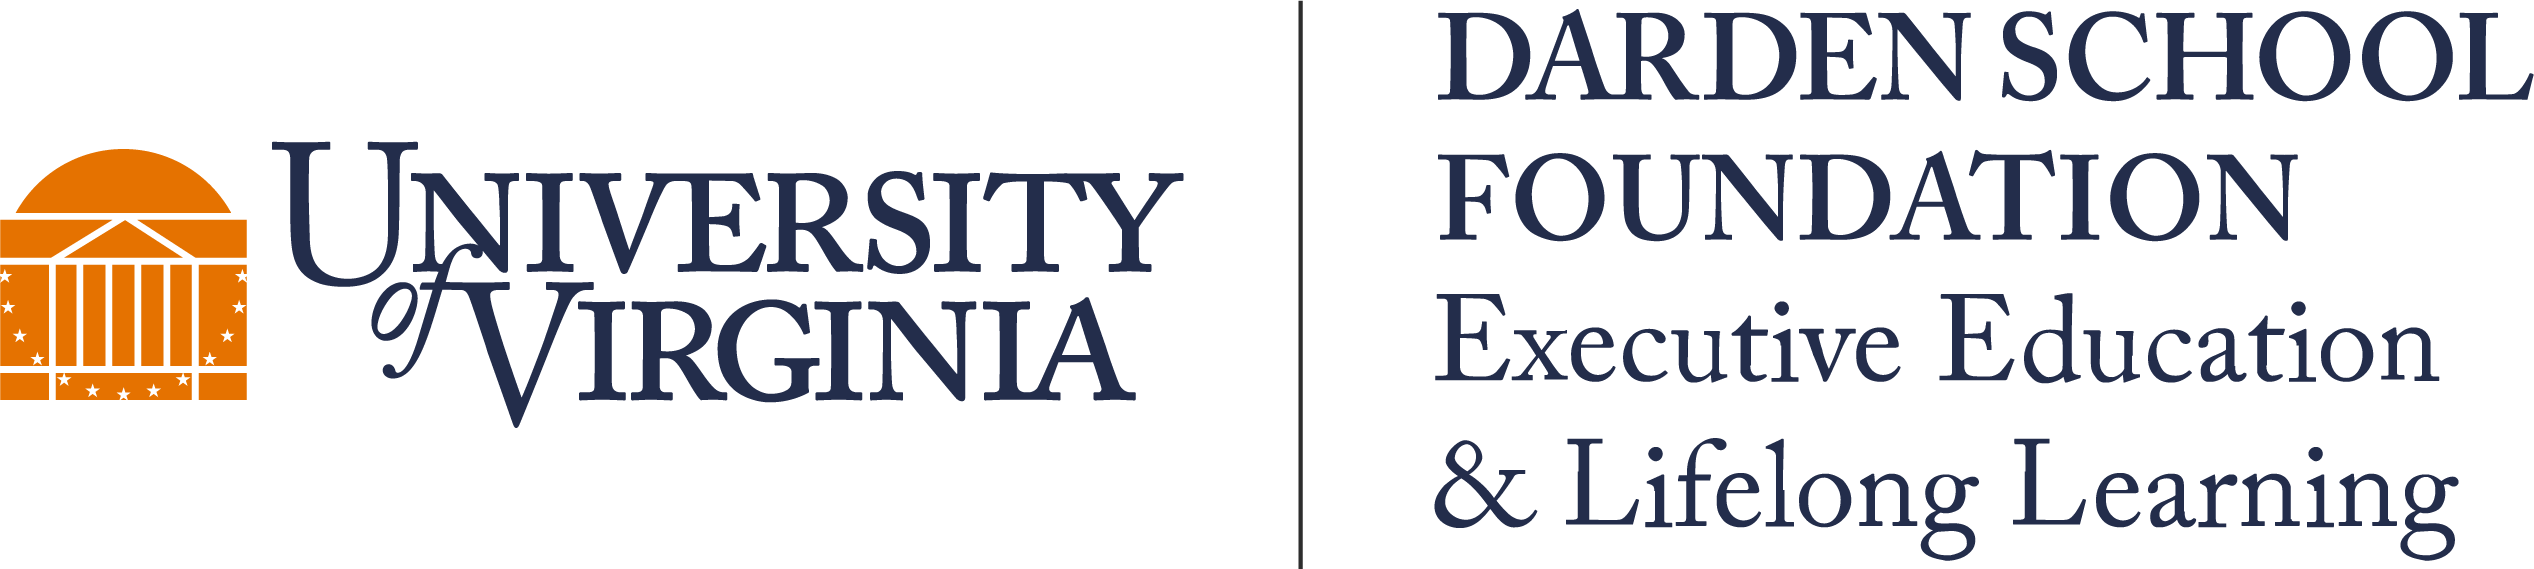 University of Virginia Darden School Foundation Executive Education & Lifelong Learning